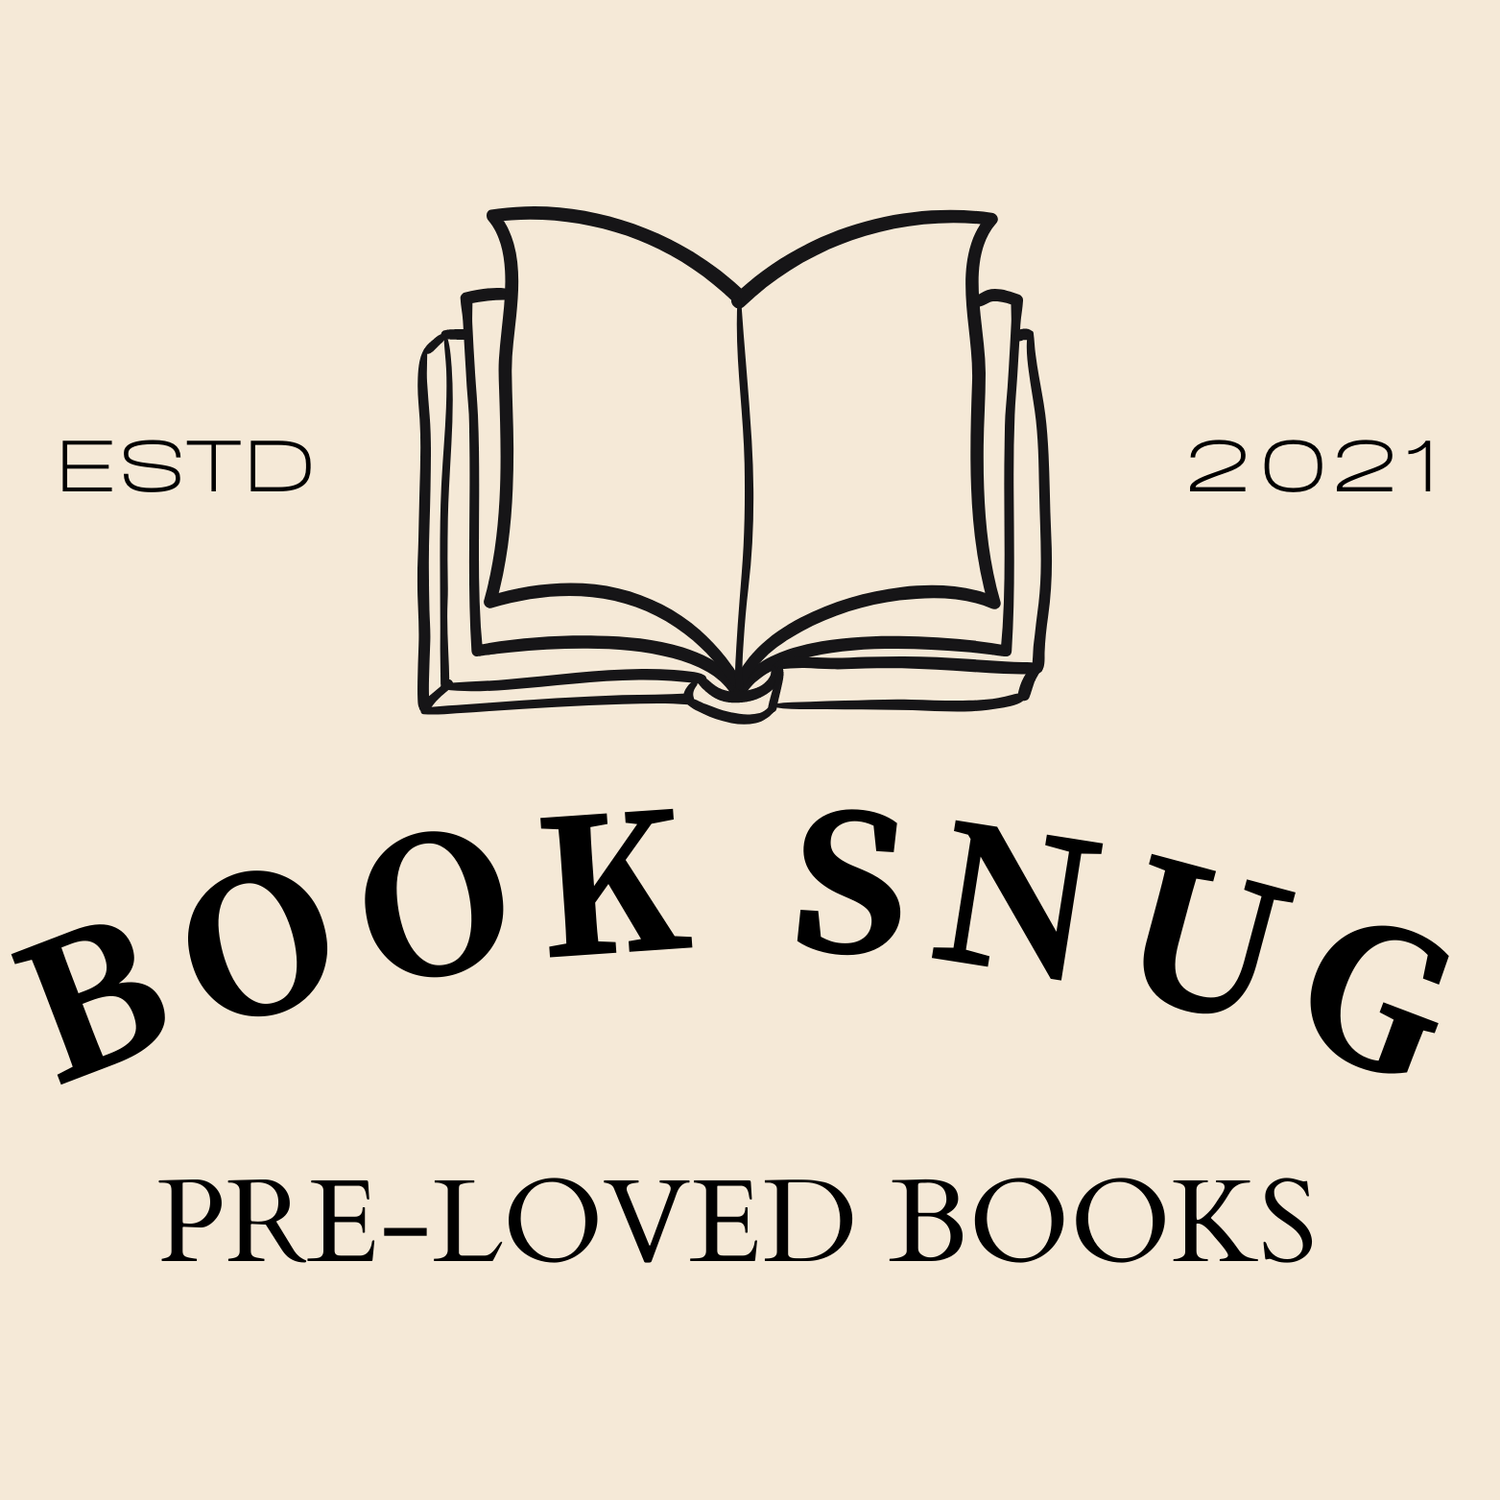 Book Snug Pre-Loved Books